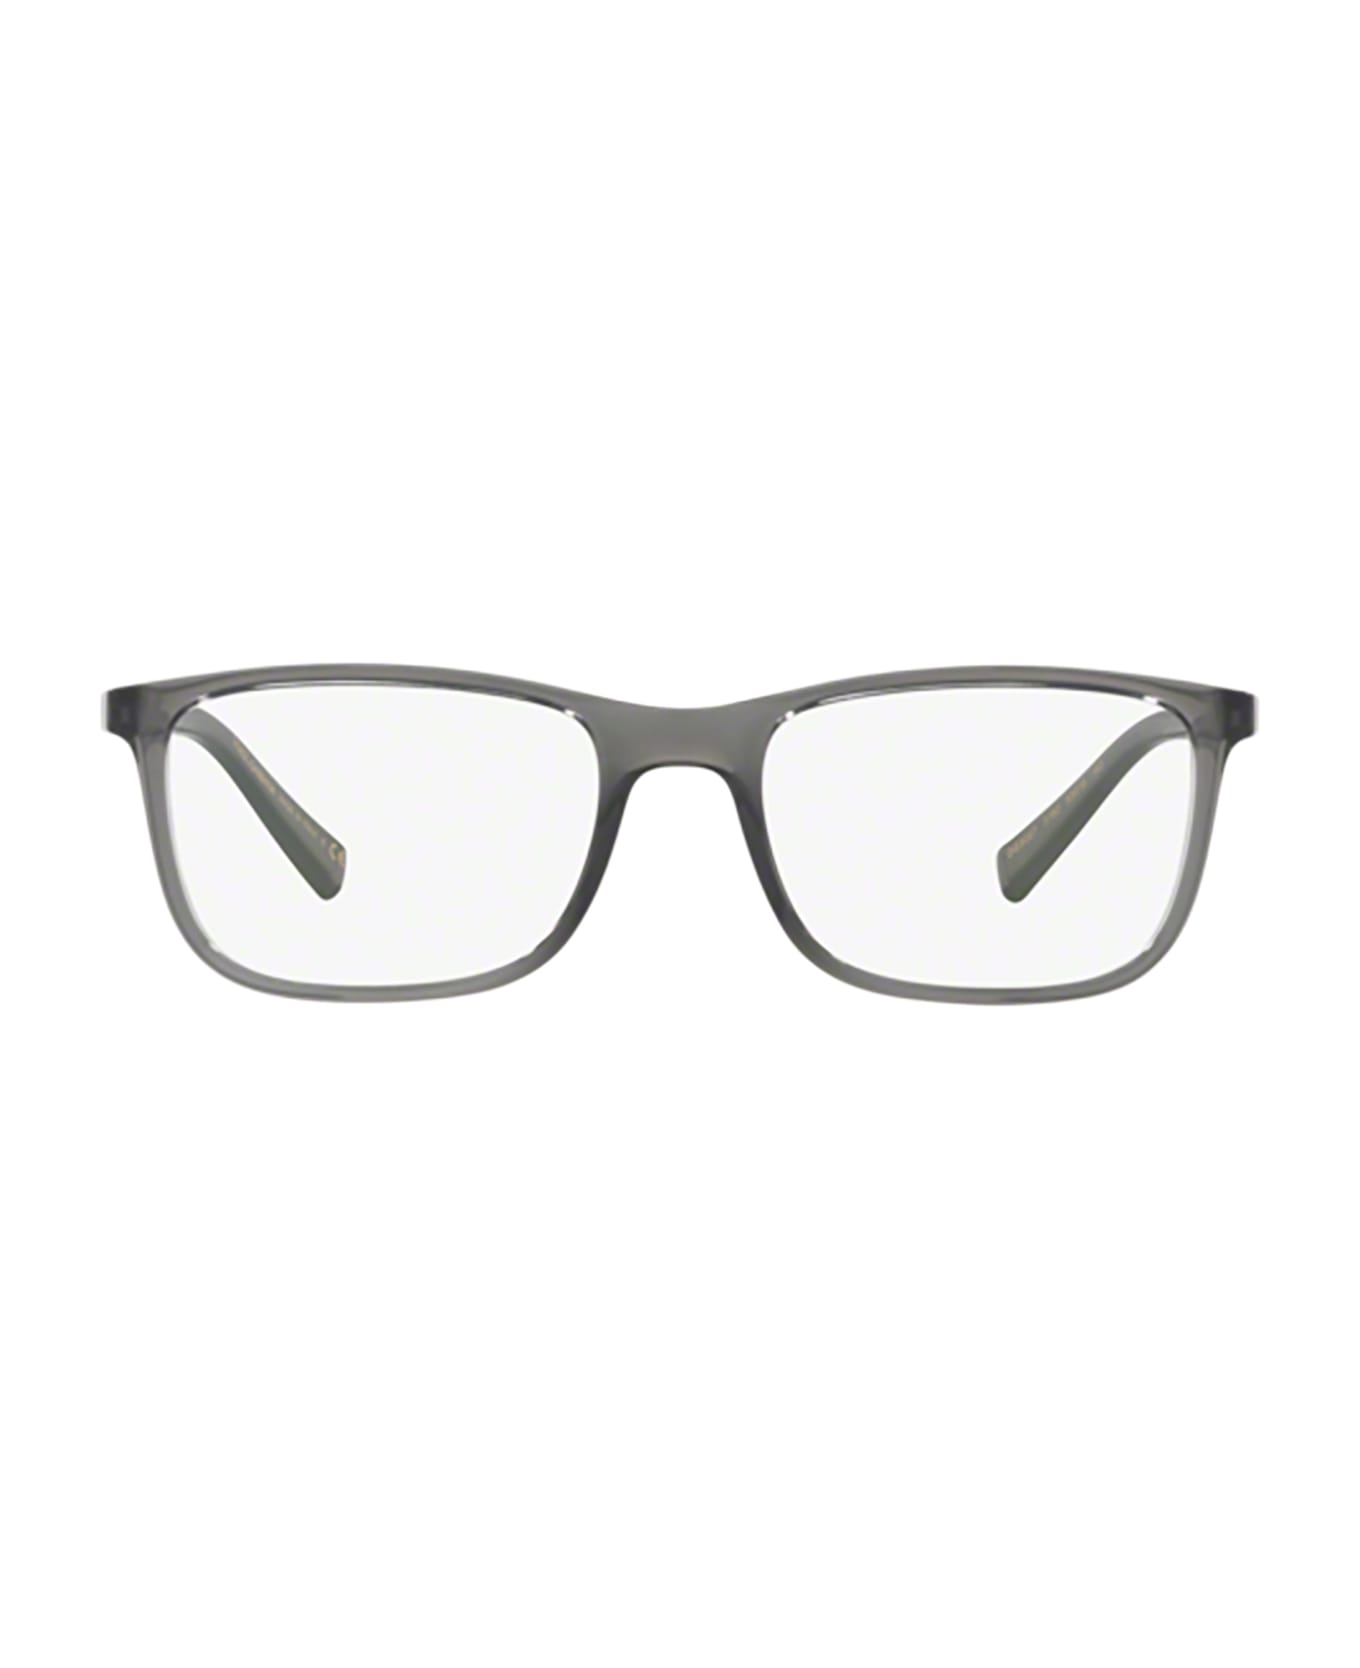 Dolce & Gabbana Eyewear Dg5027 Transparent Grey Glasses - TRANSPARENT GREY